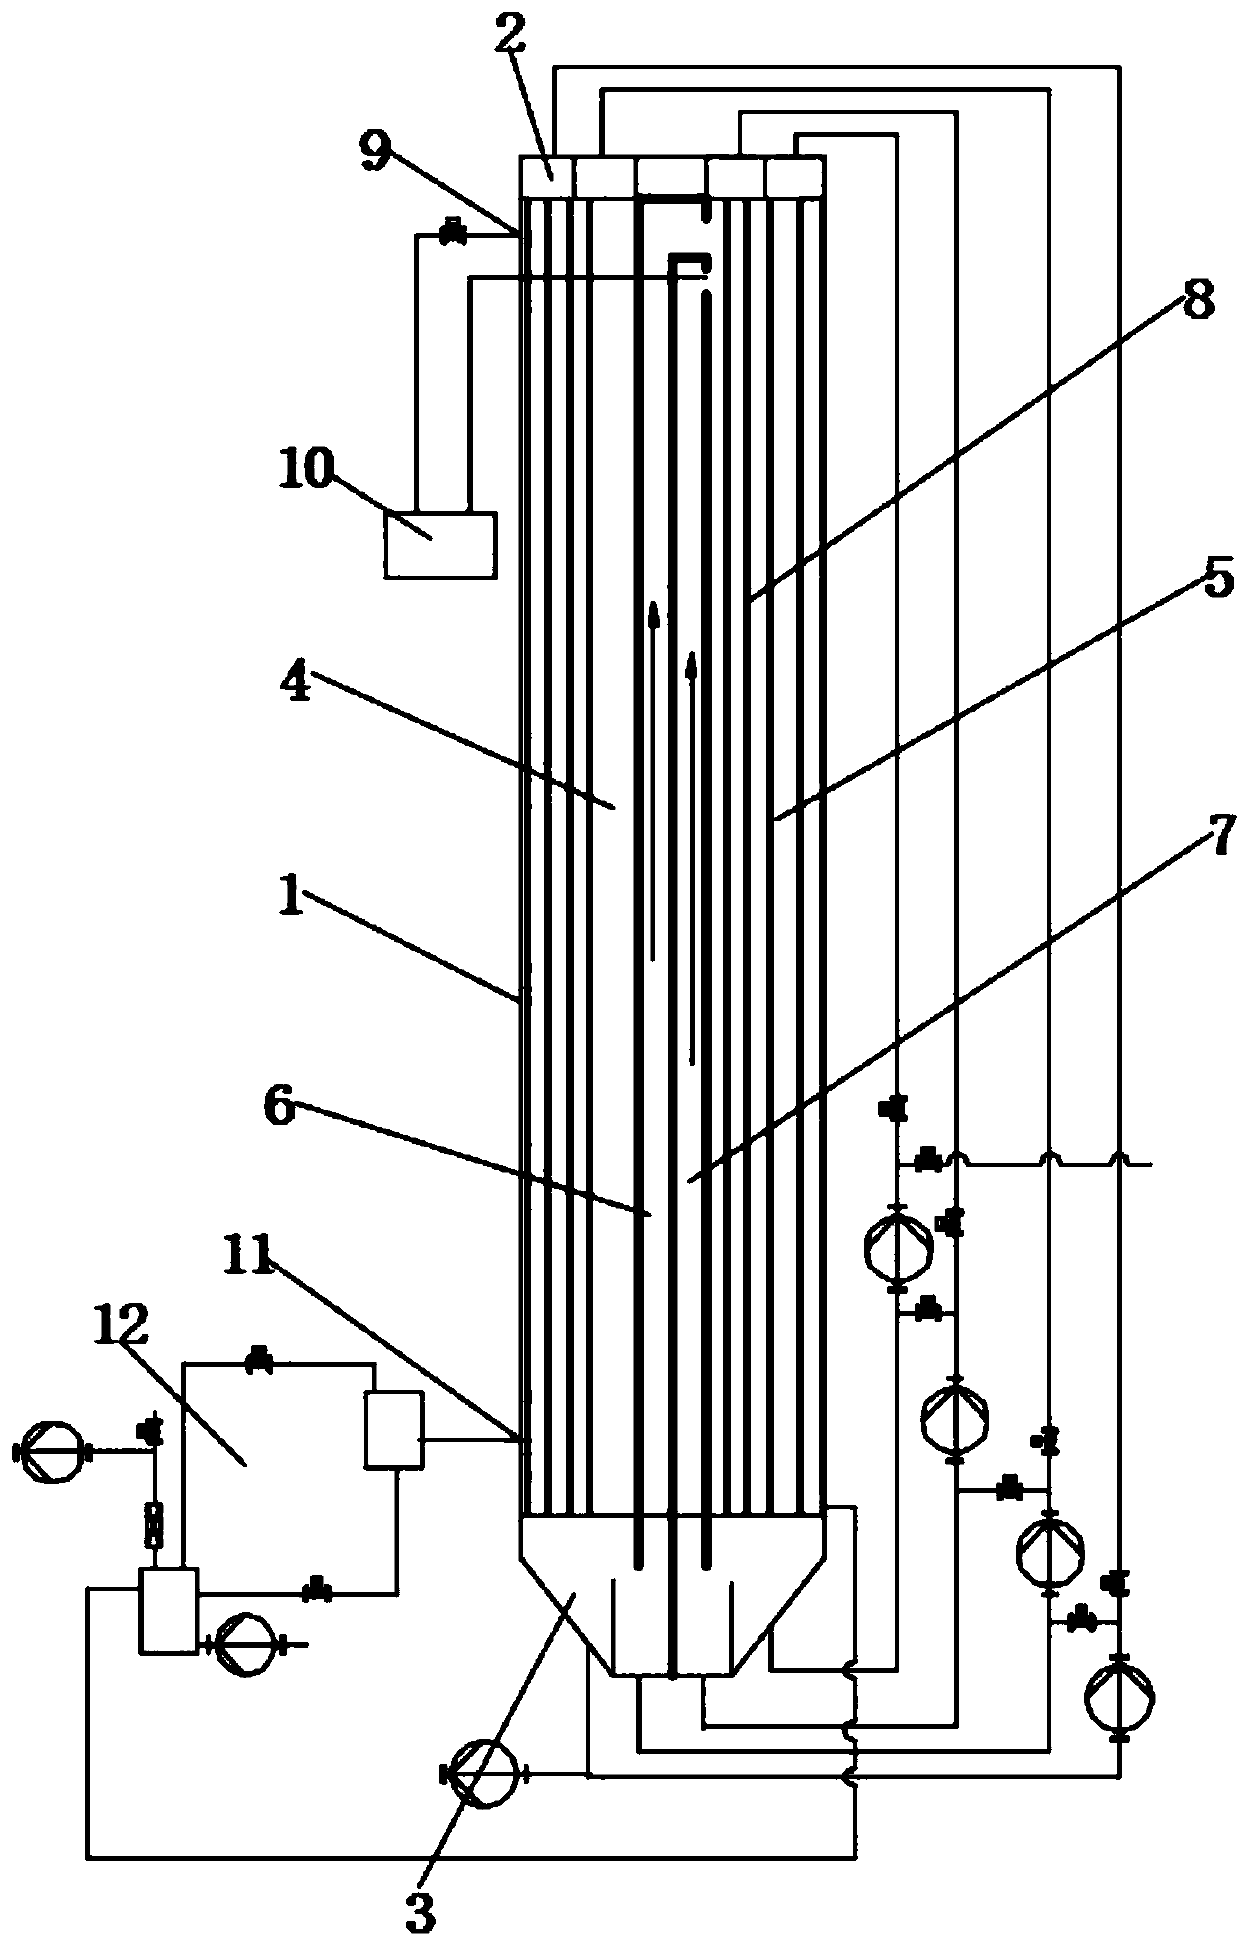 Serial/parallel integrated multi-effect evaporator